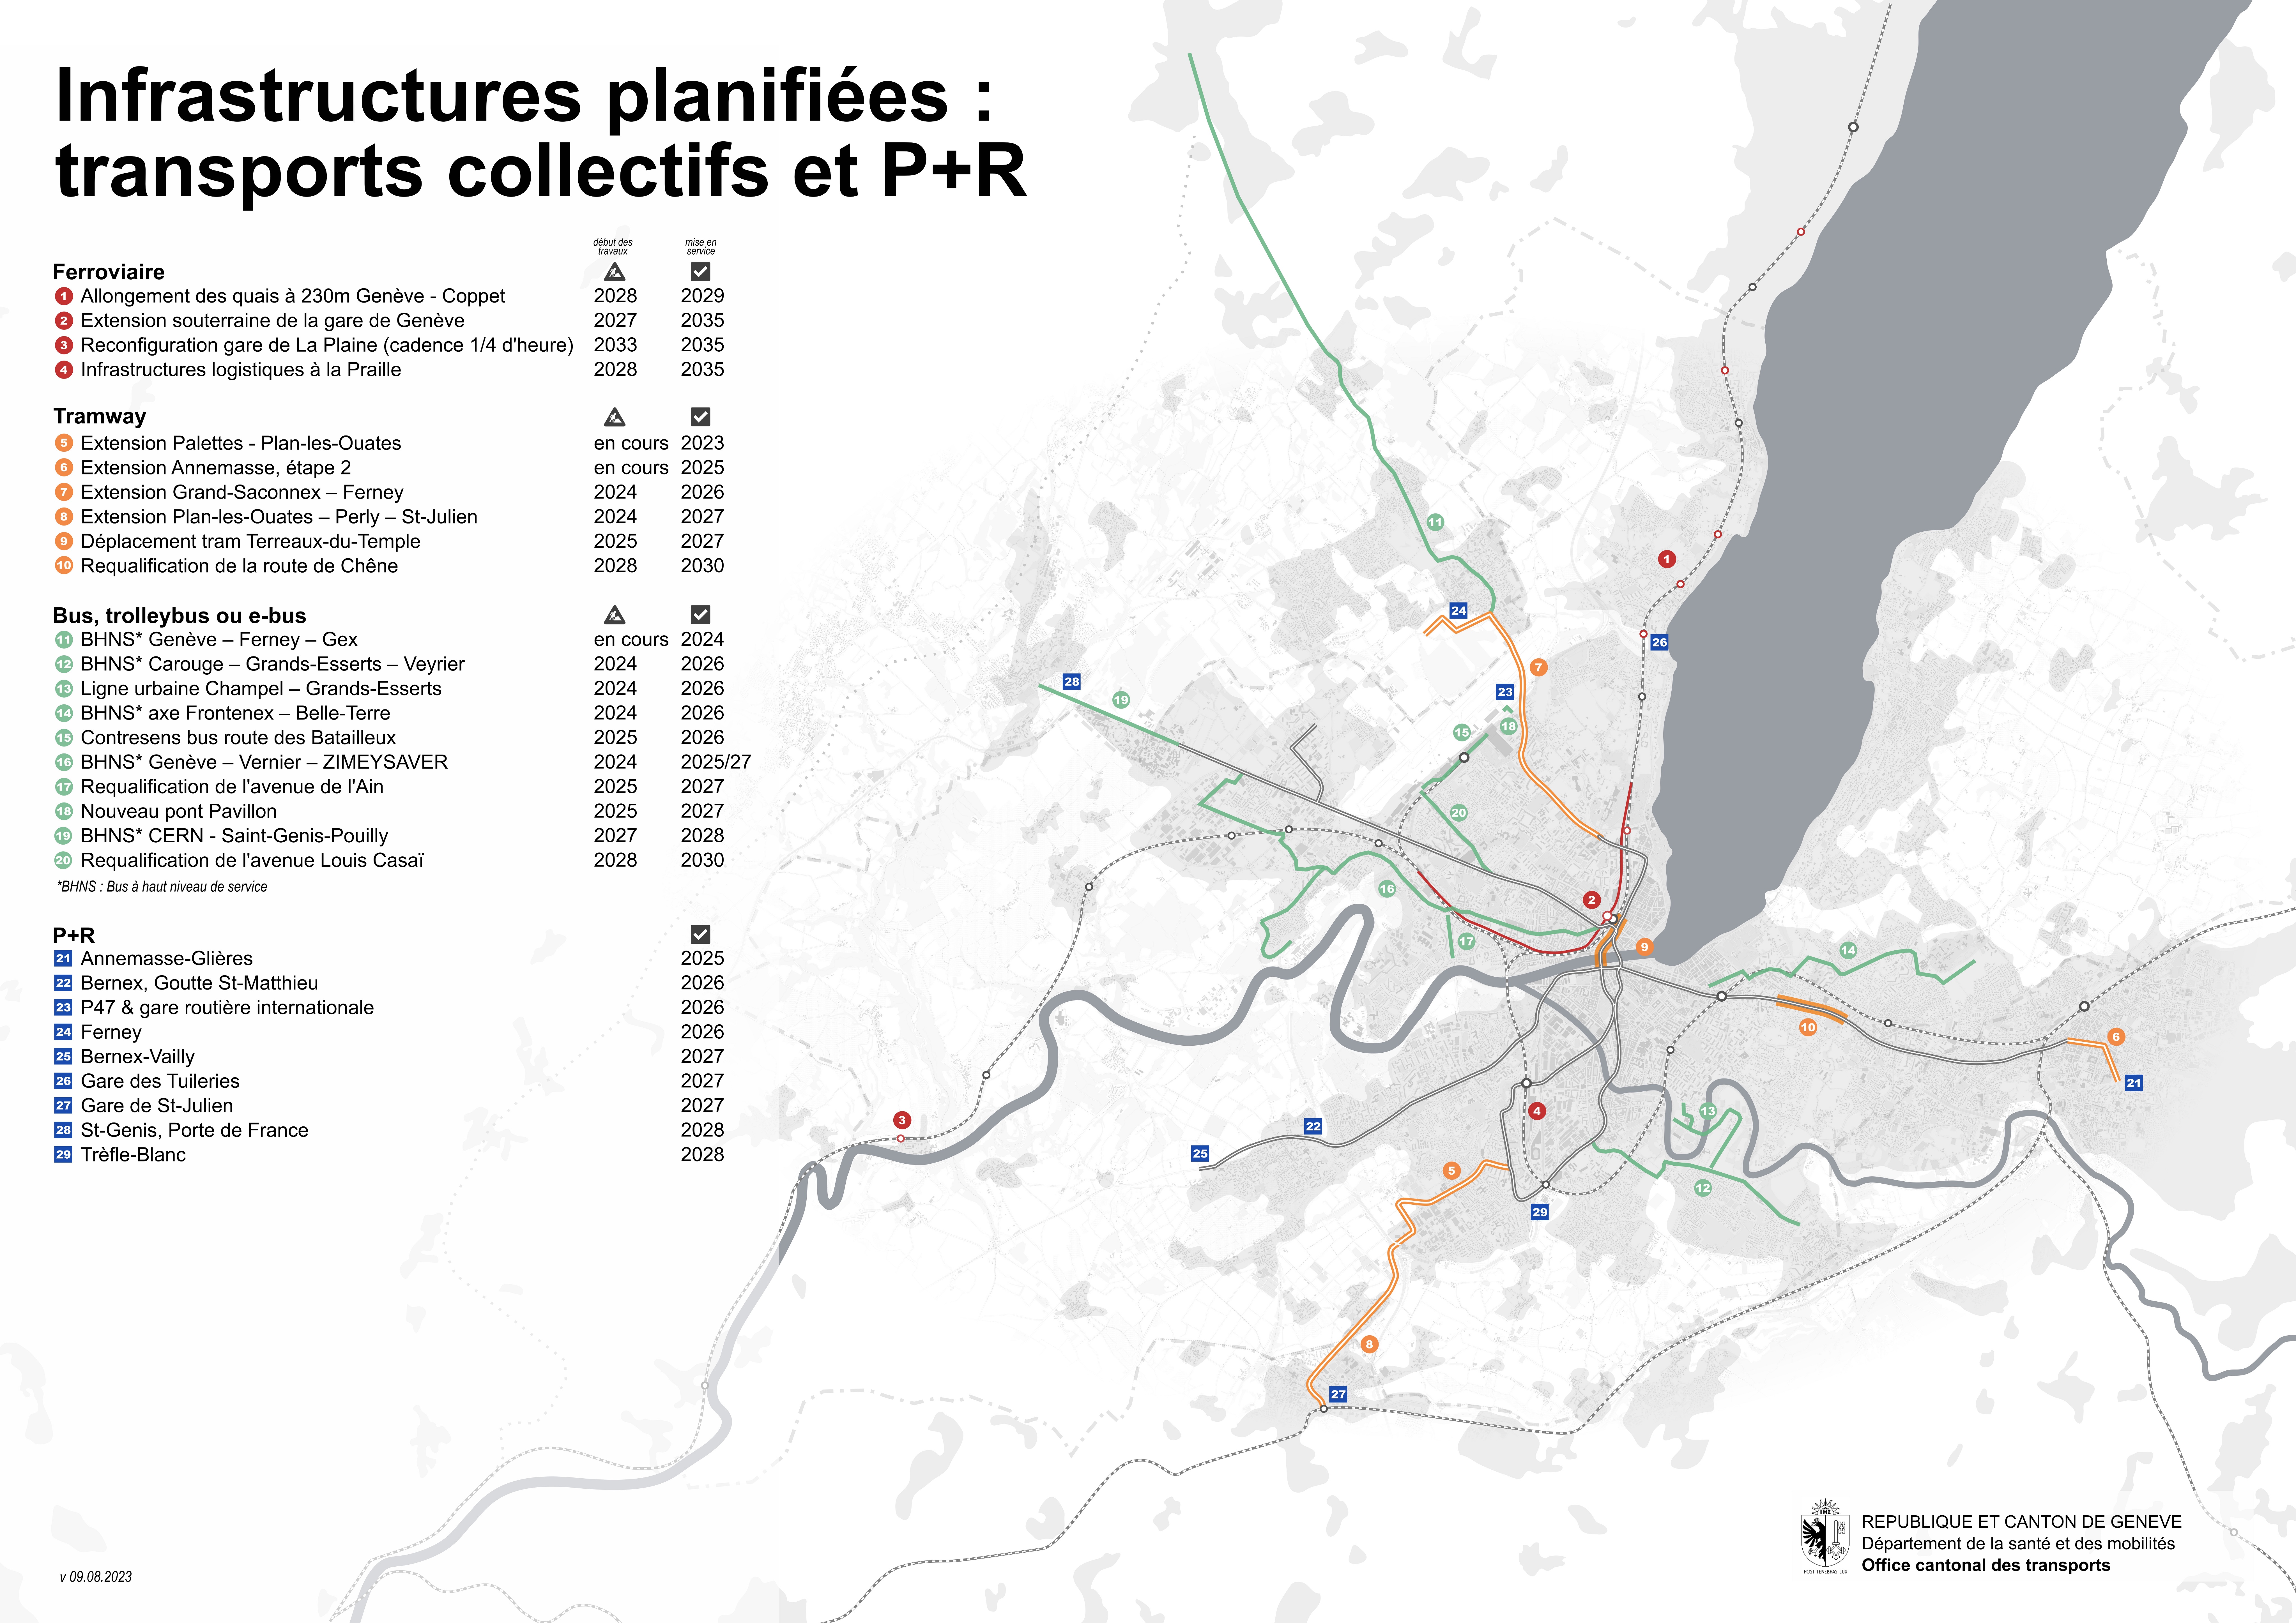 Infrastructures planifiées - transports collectifs